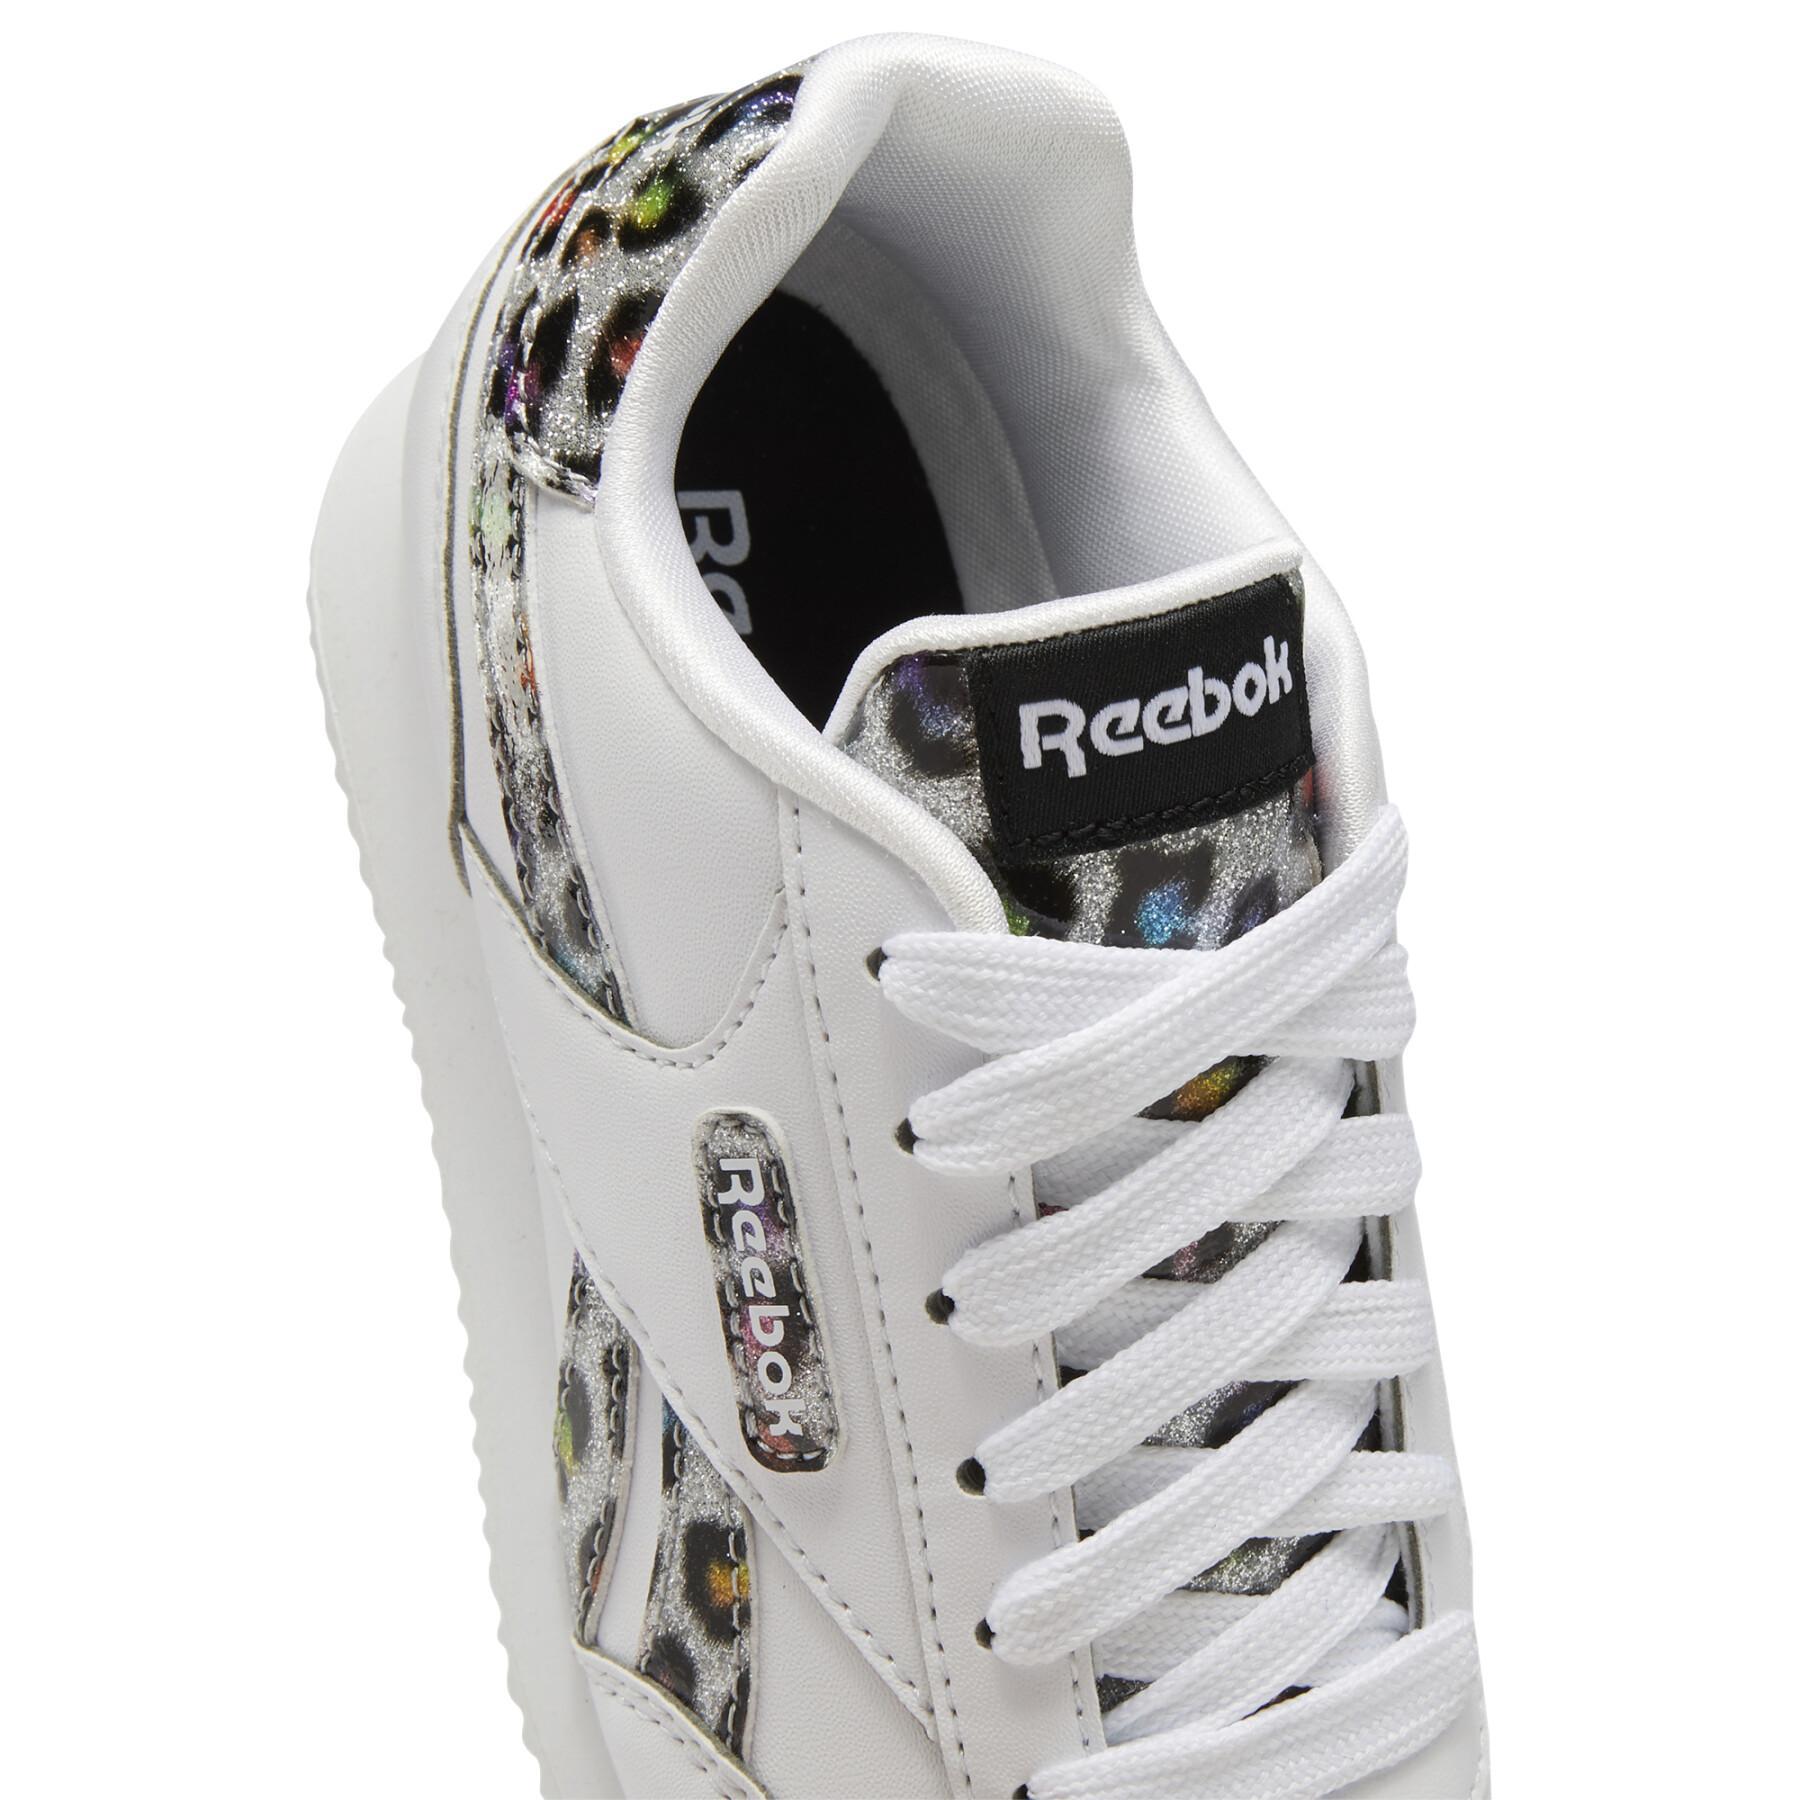 Sportschoenen voor meisjes Reebok Royal Classic Jogger 3